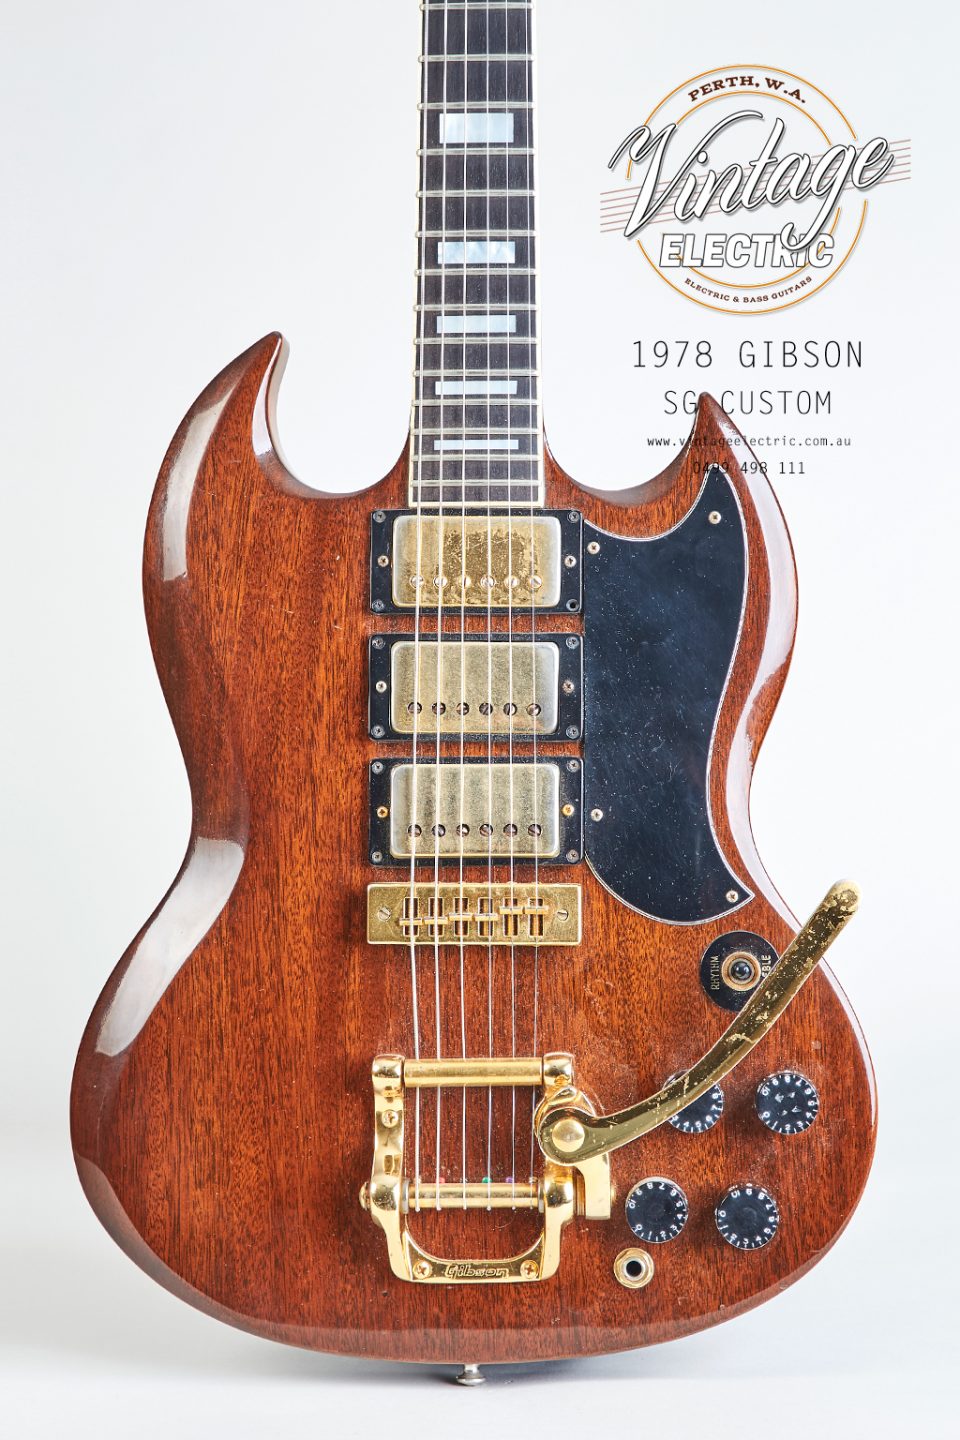 1978 Gibson SG Custom Body